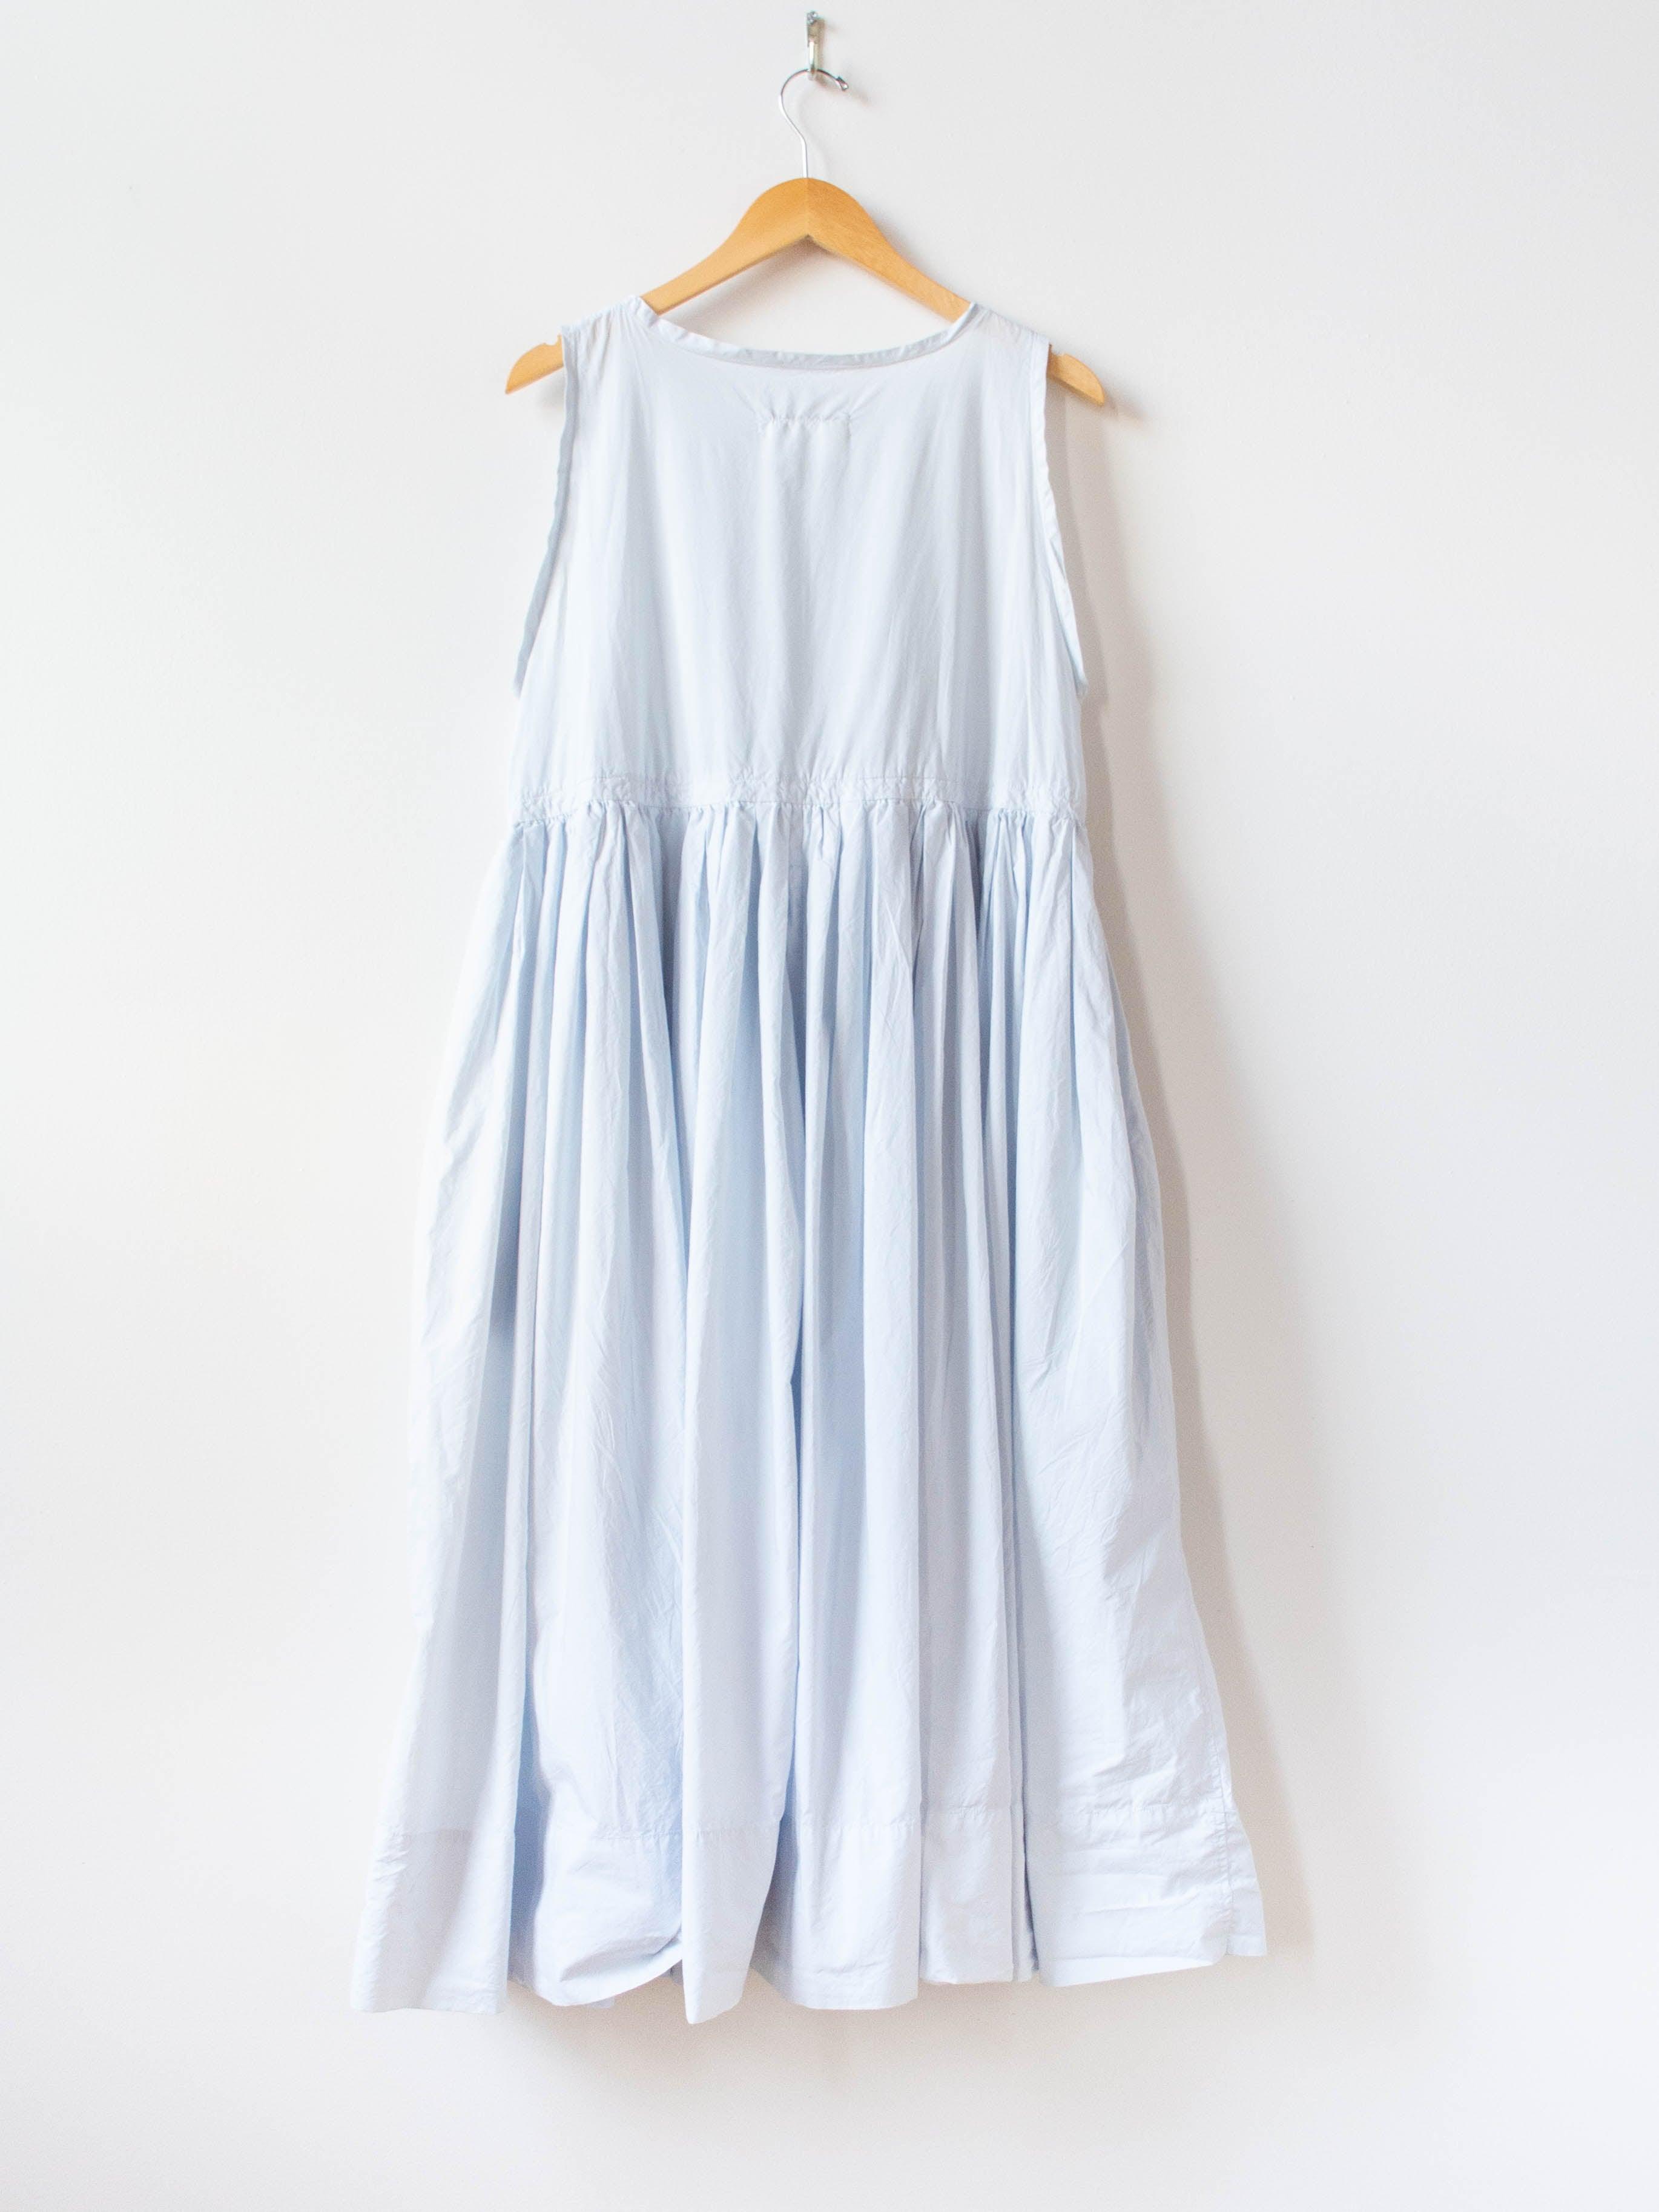 Namu Shop - Veritecoeur Sleeveless Gather Dress - Light Blue Gray